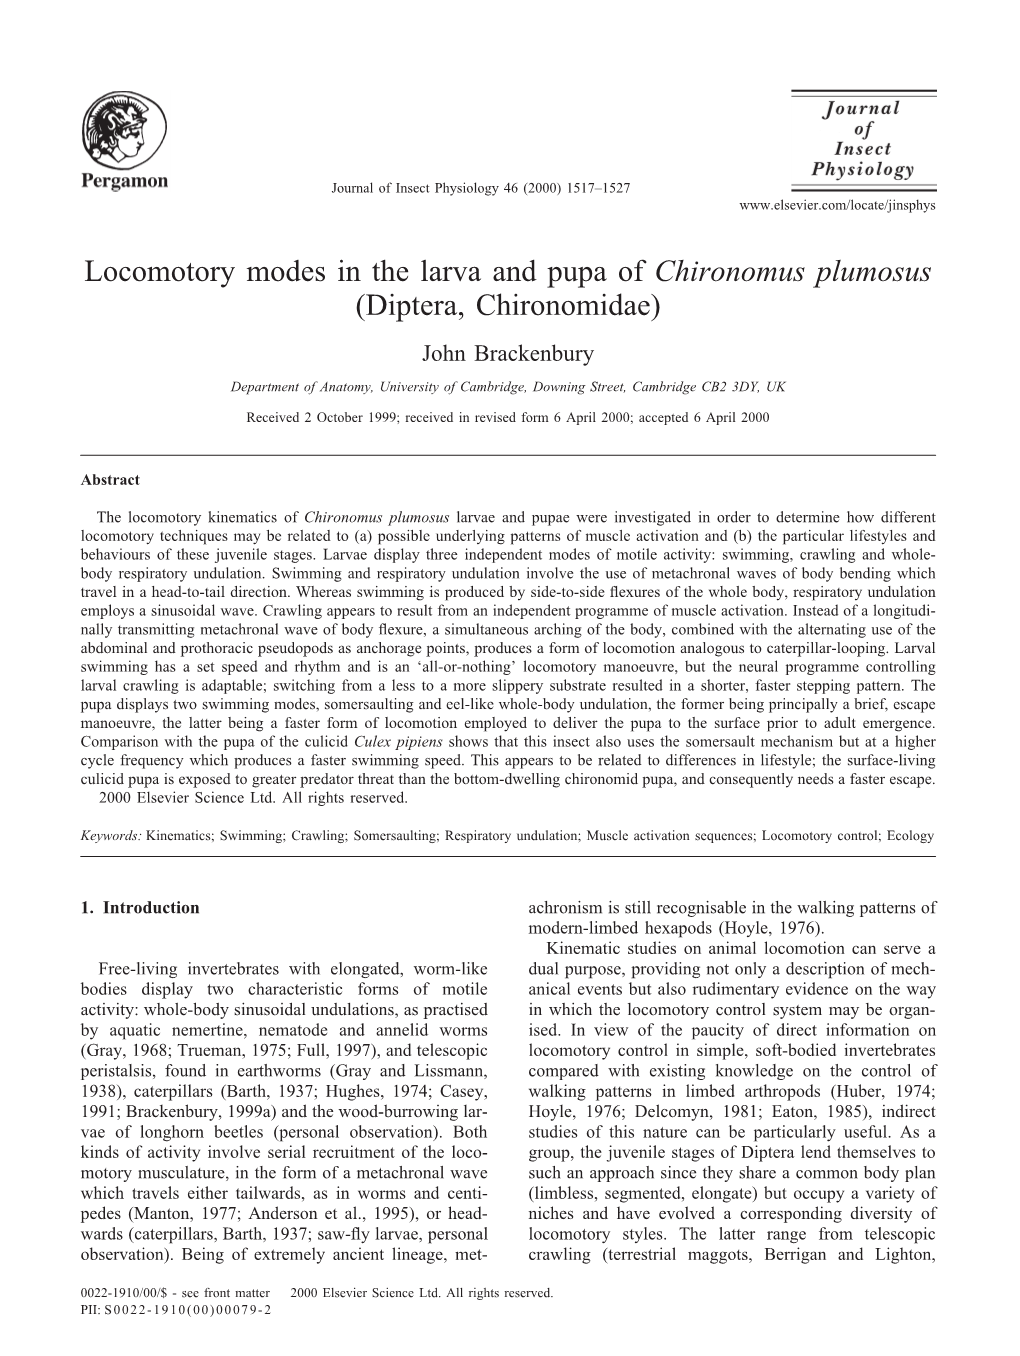 Locomotory Modes in the Larva and Pupa of Chironomus Plumosus